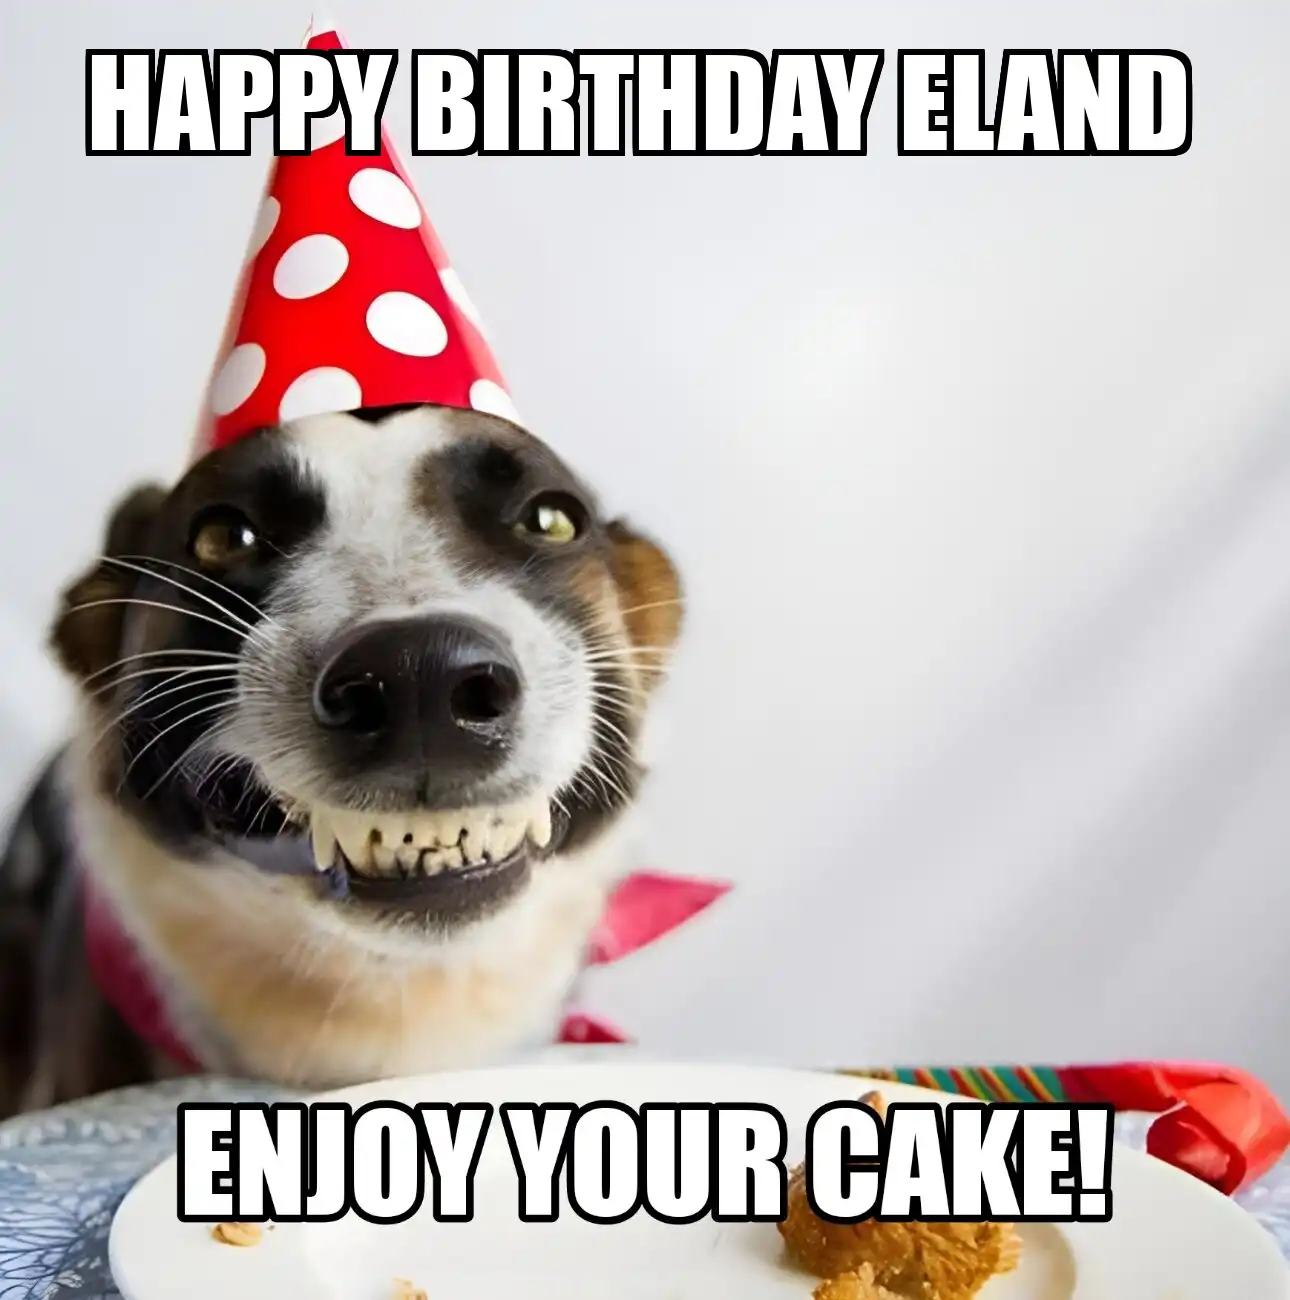 Happy Birthday Eland Enjoy Your Cake Dog Meme